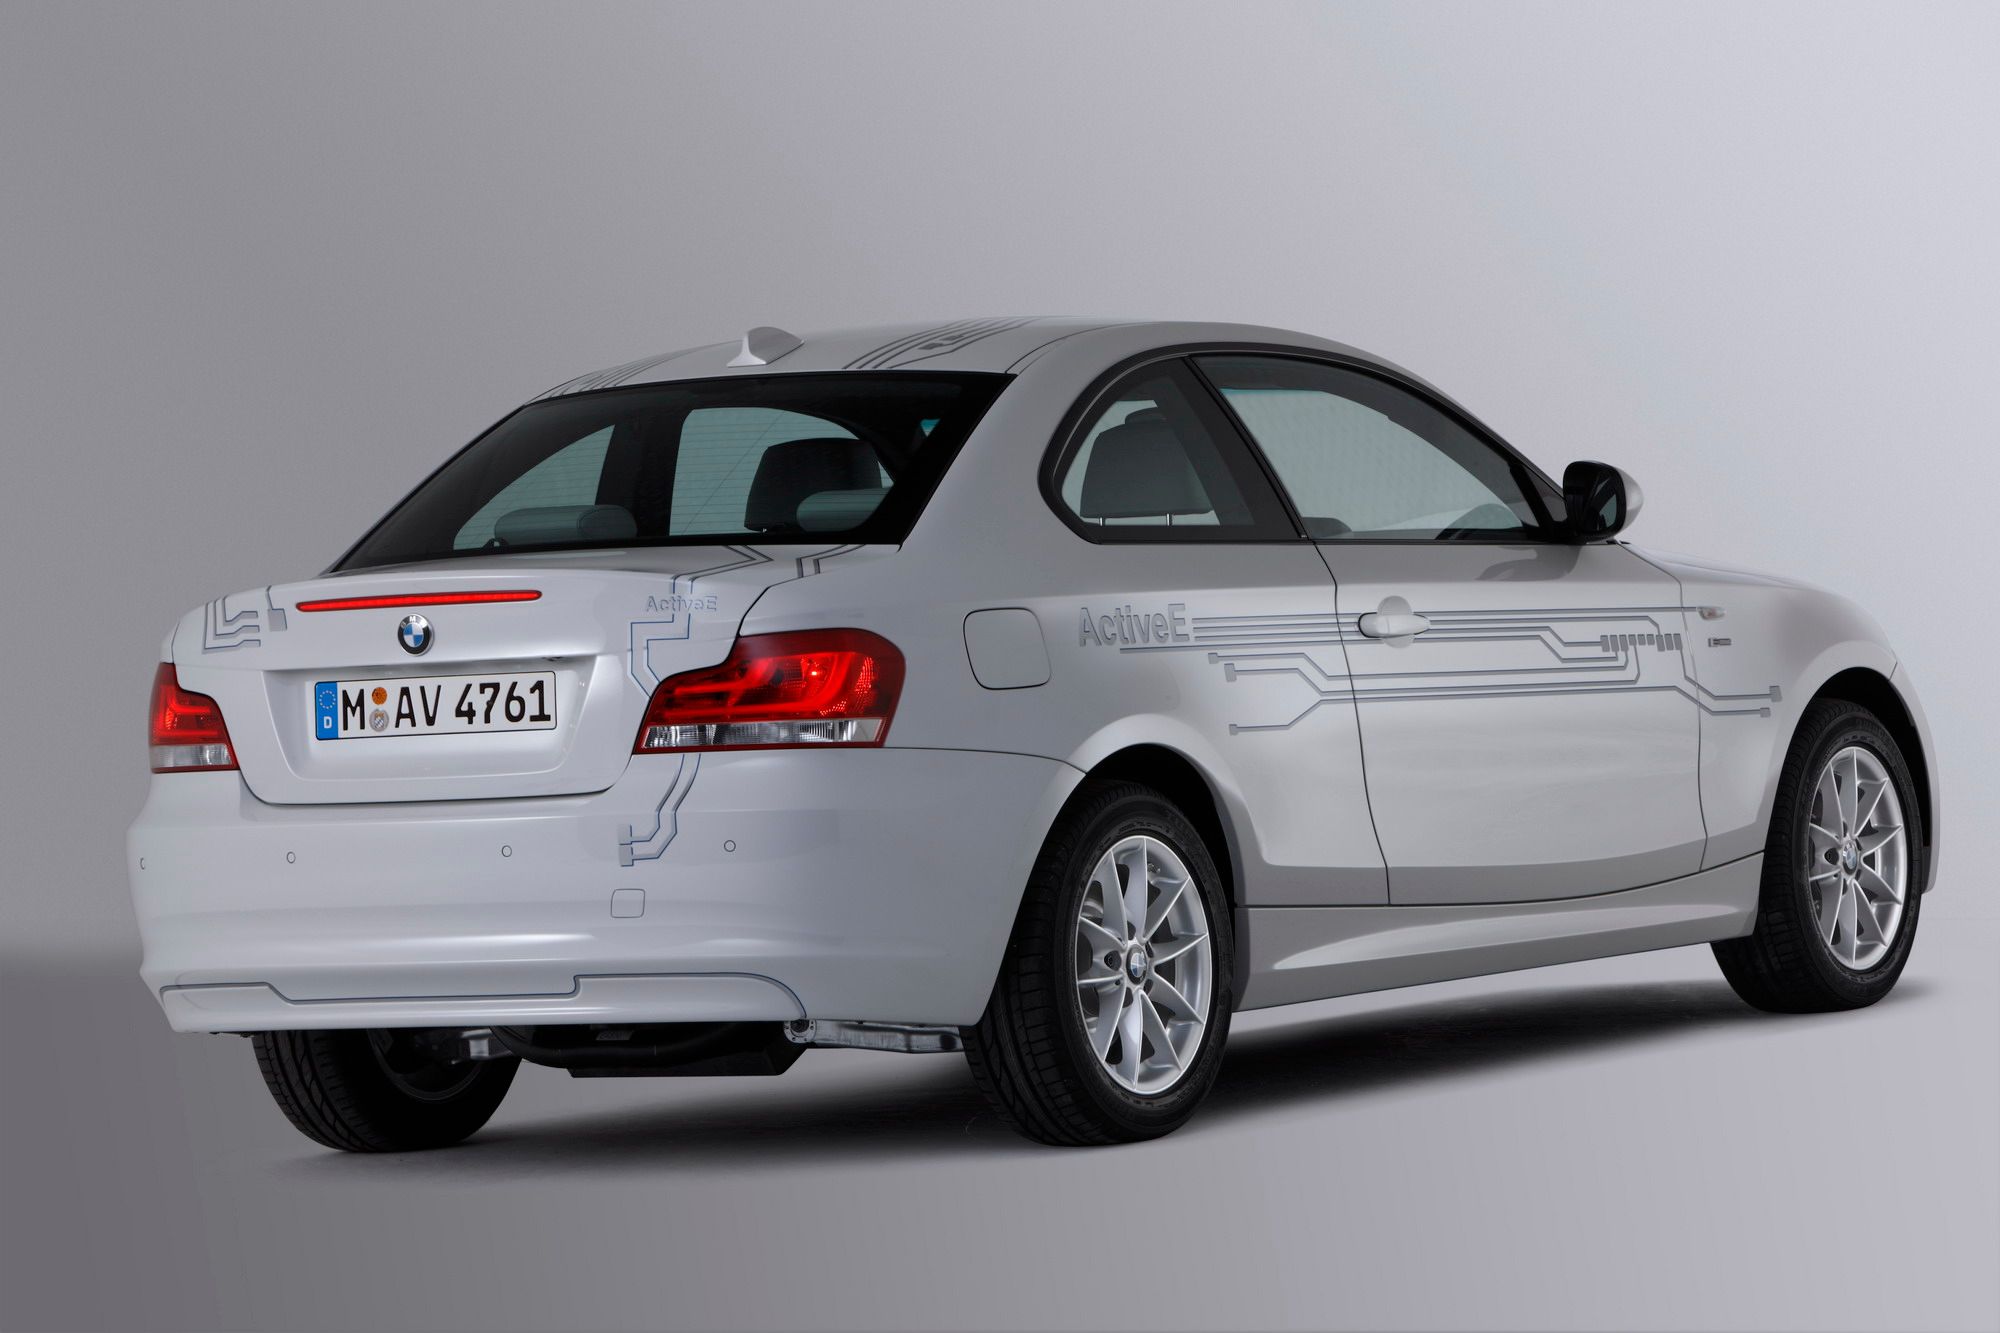 2012 BMW ActiveE Electric Vehicle